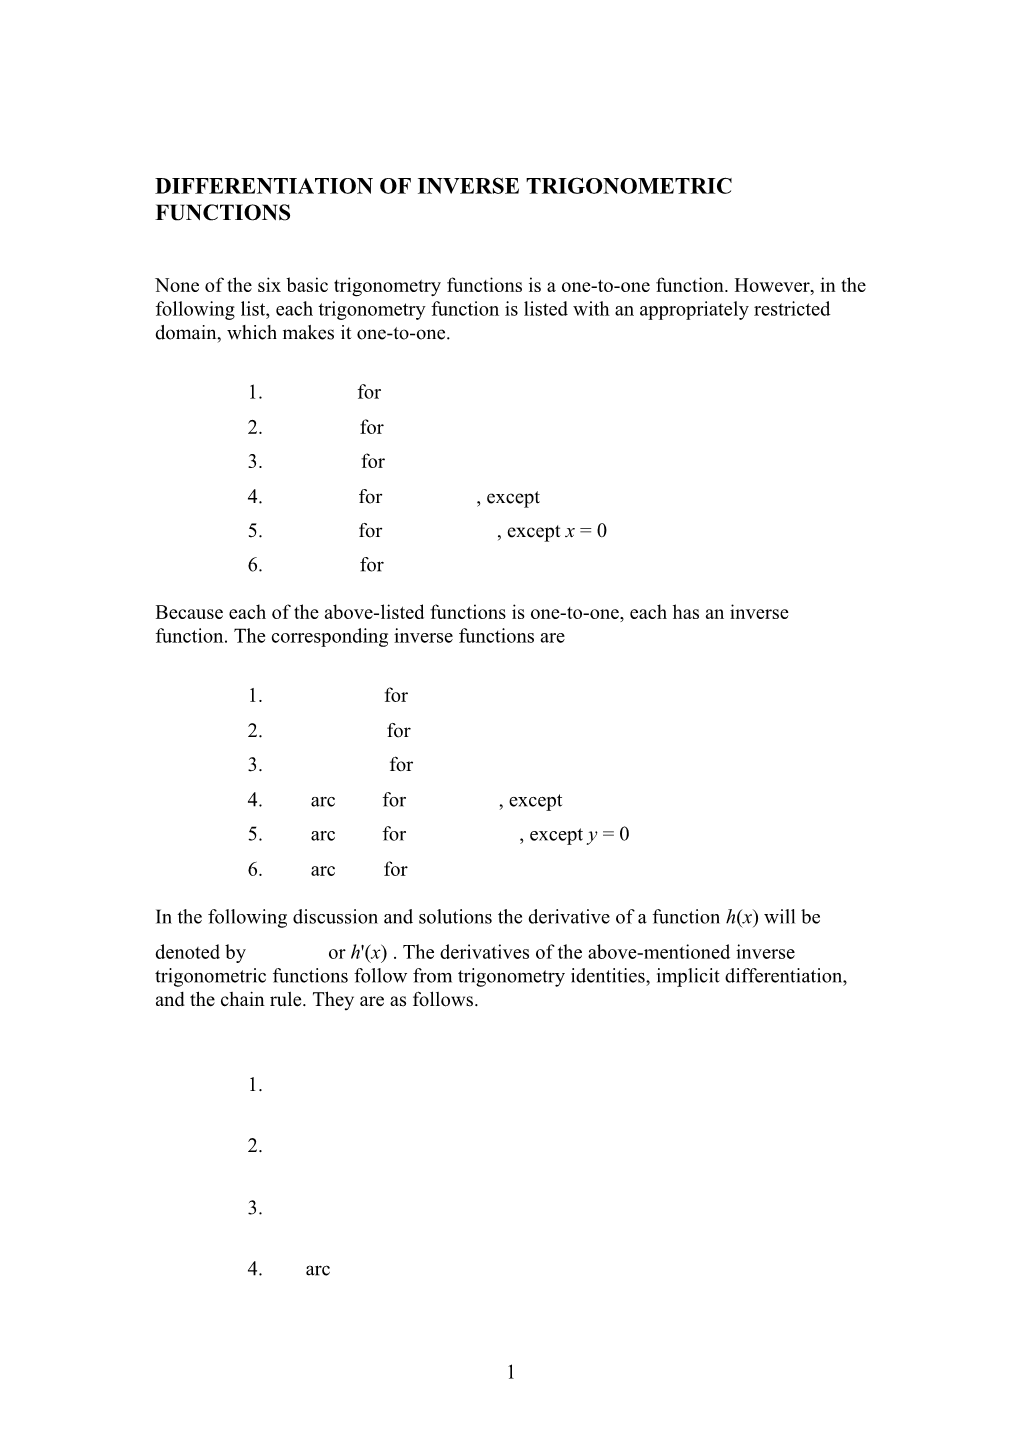 Differentiation of Inverse Trigonometric Functions